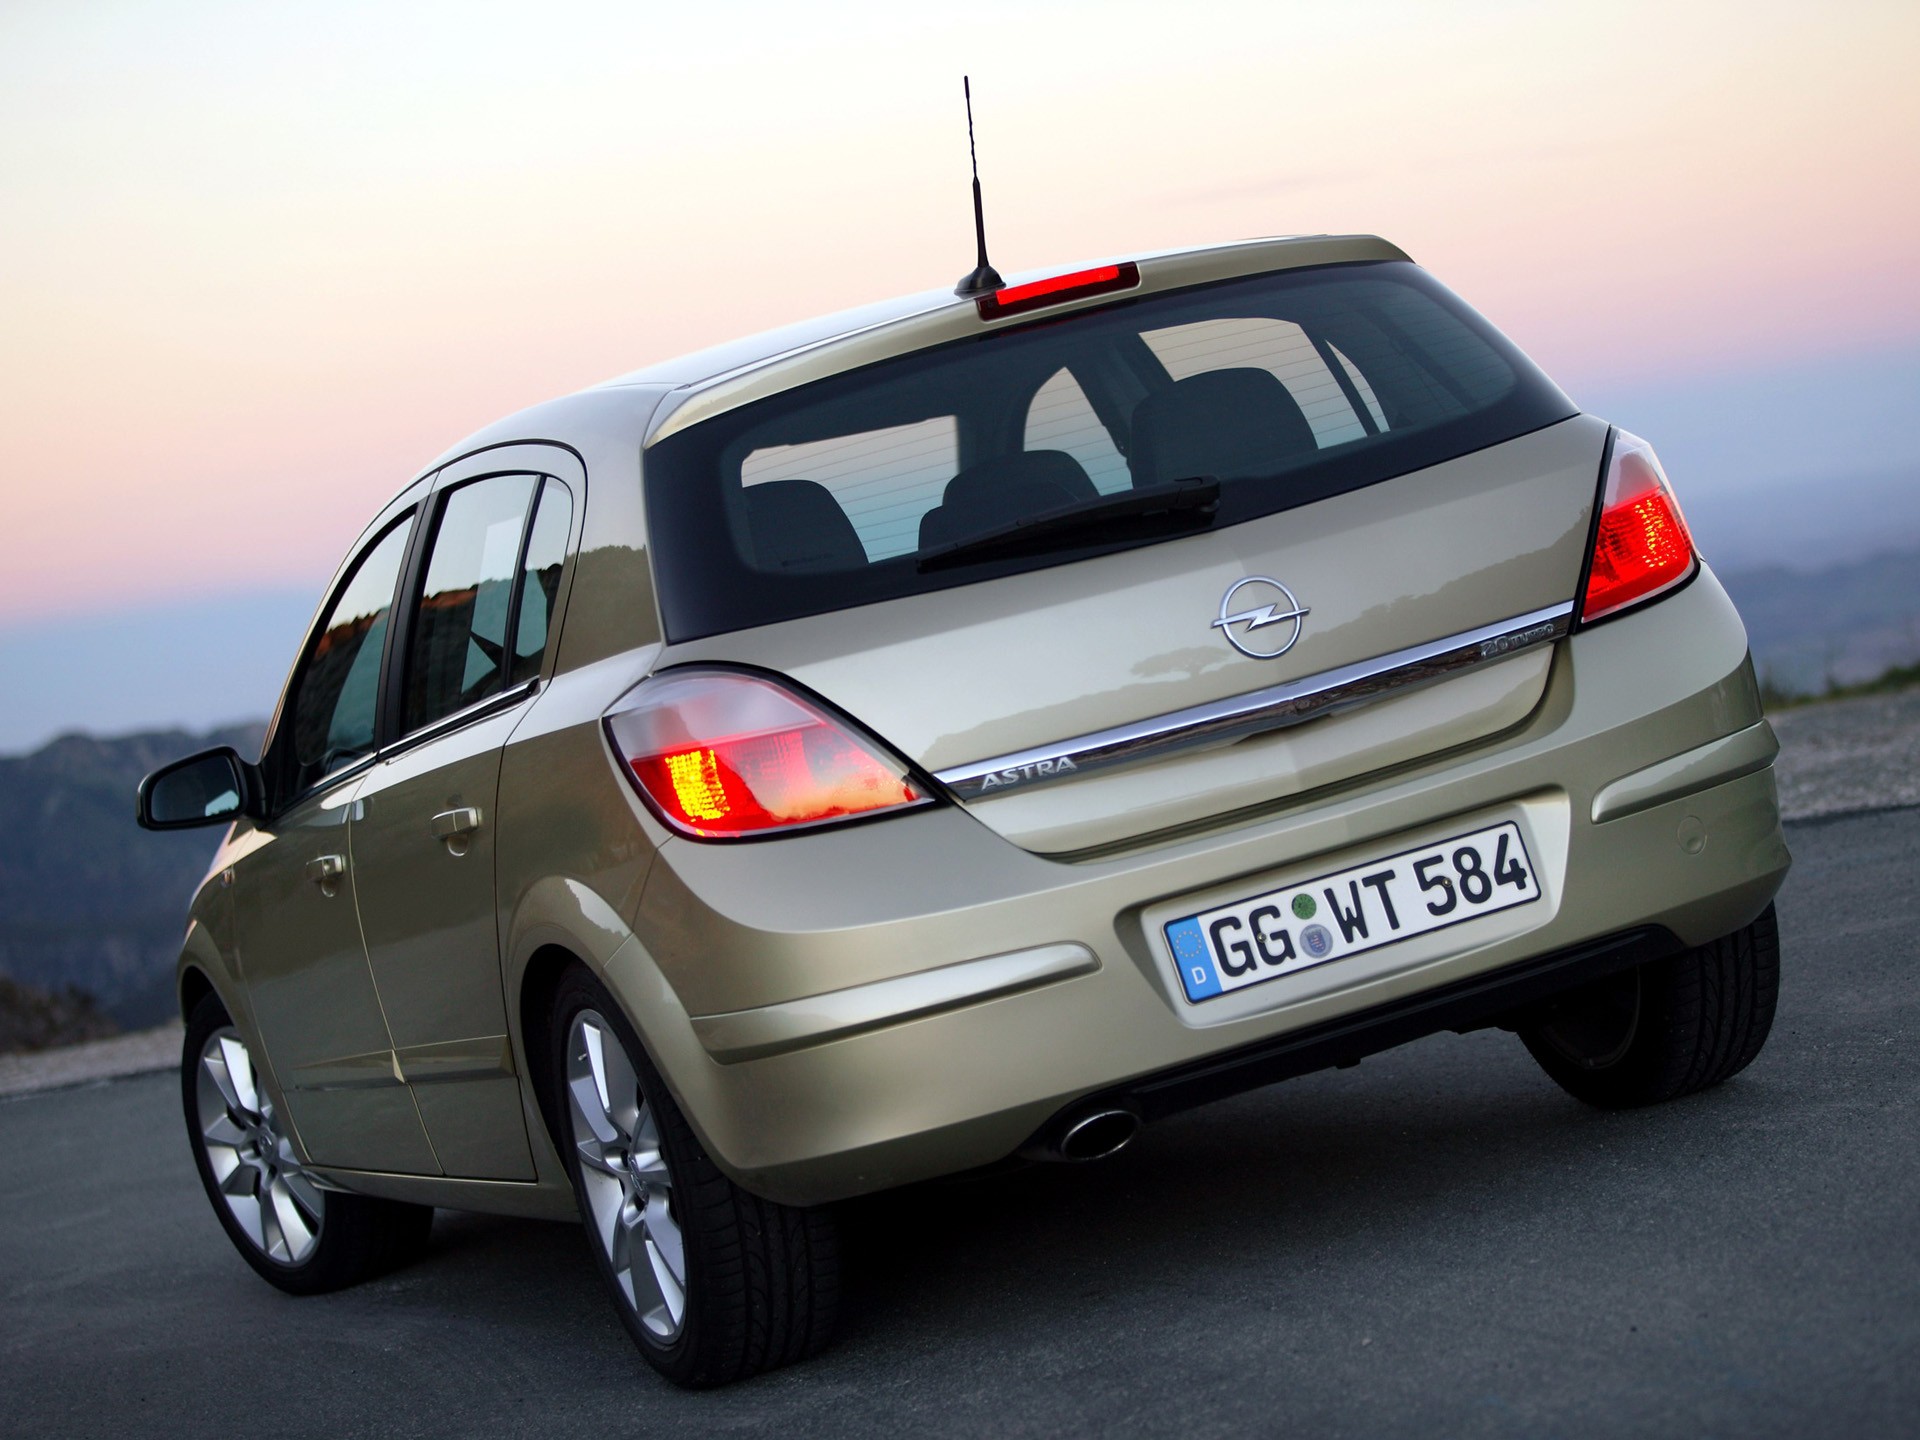 Opel Astra Hatchback 5 Doors Specs & Photos - autoevolution